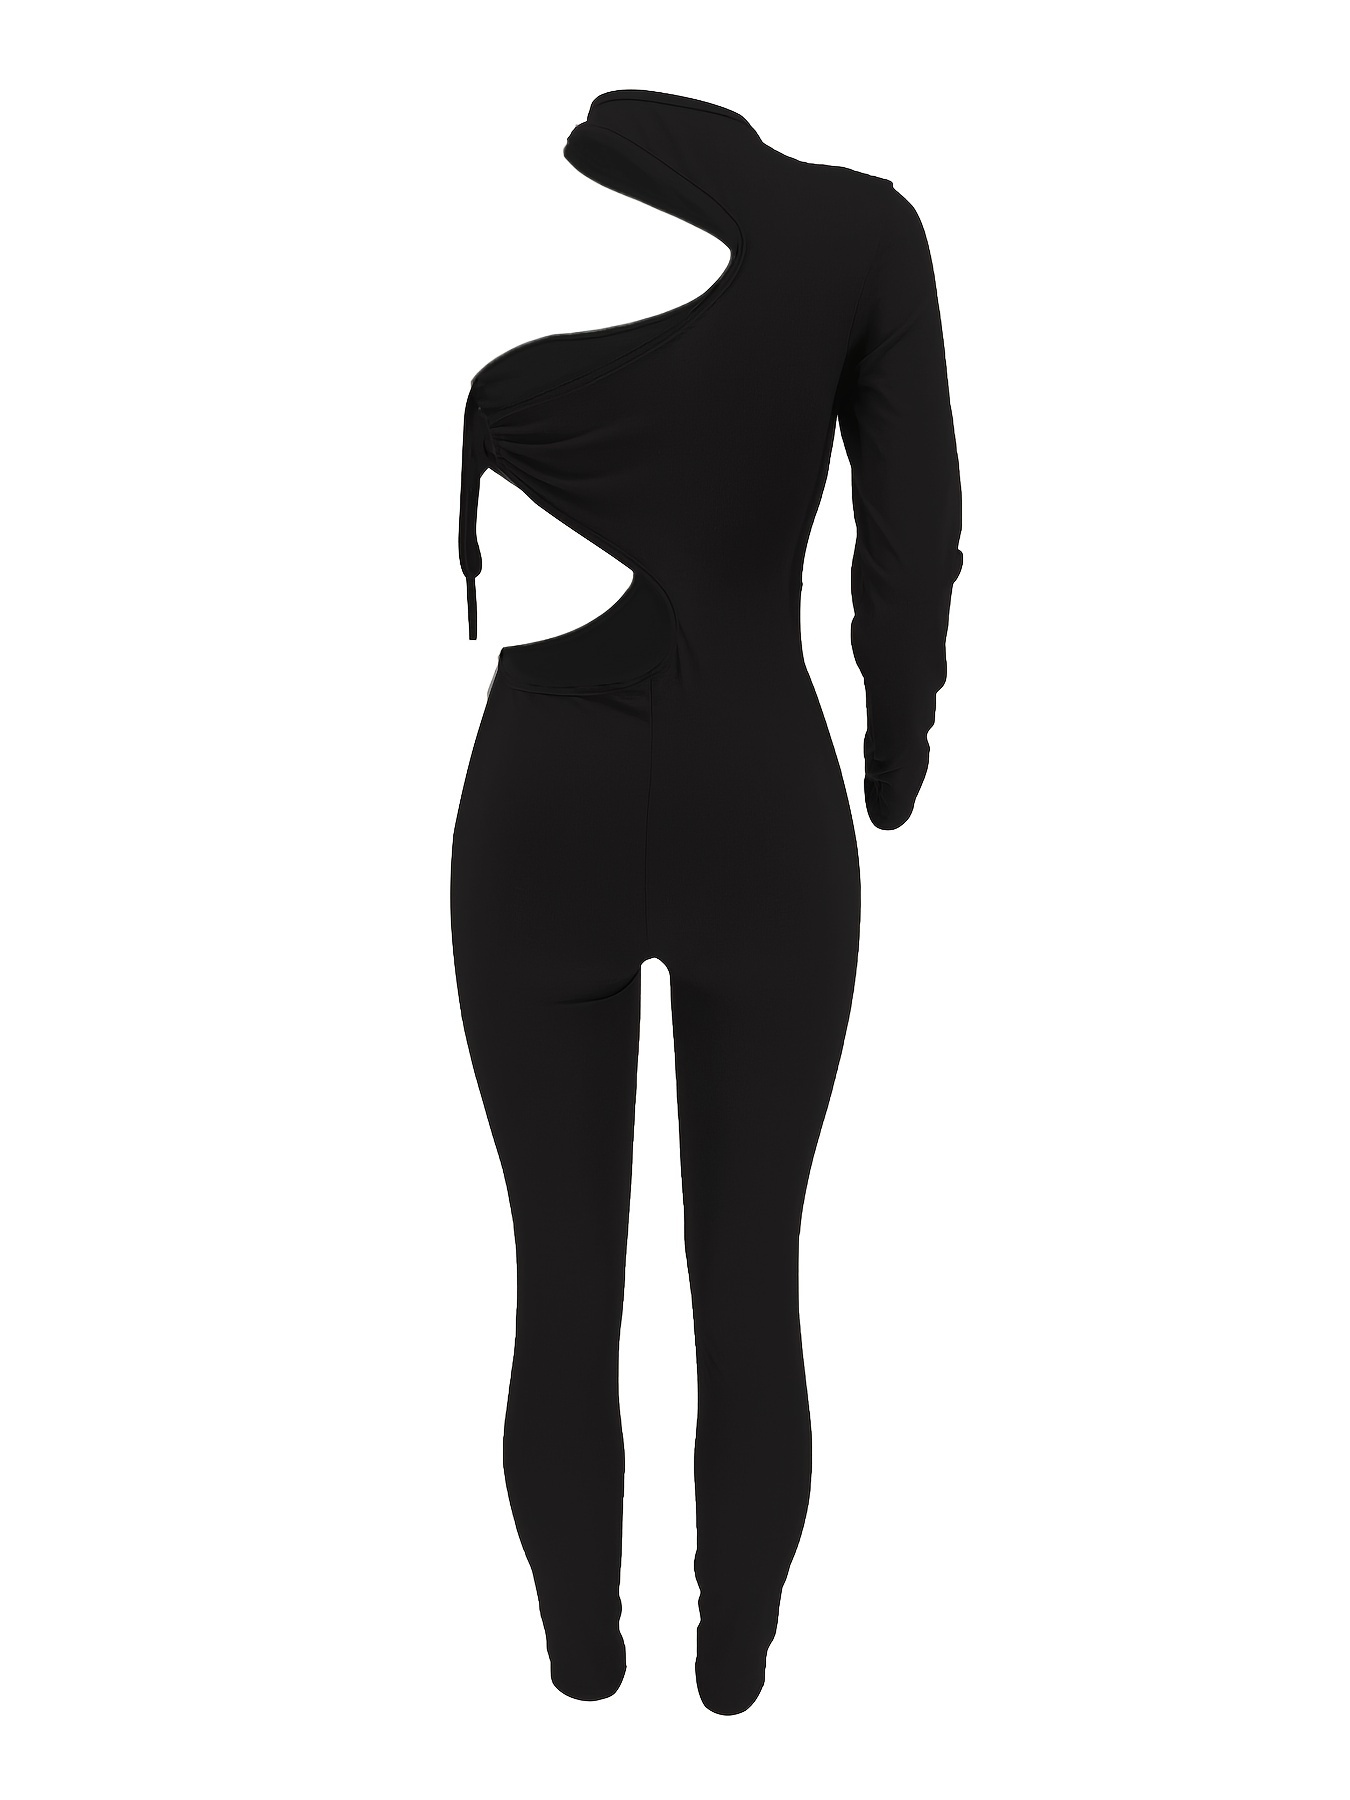 Merlinda Jumpsuit - Scoop Neck Bodycon Jumpsuit in Black